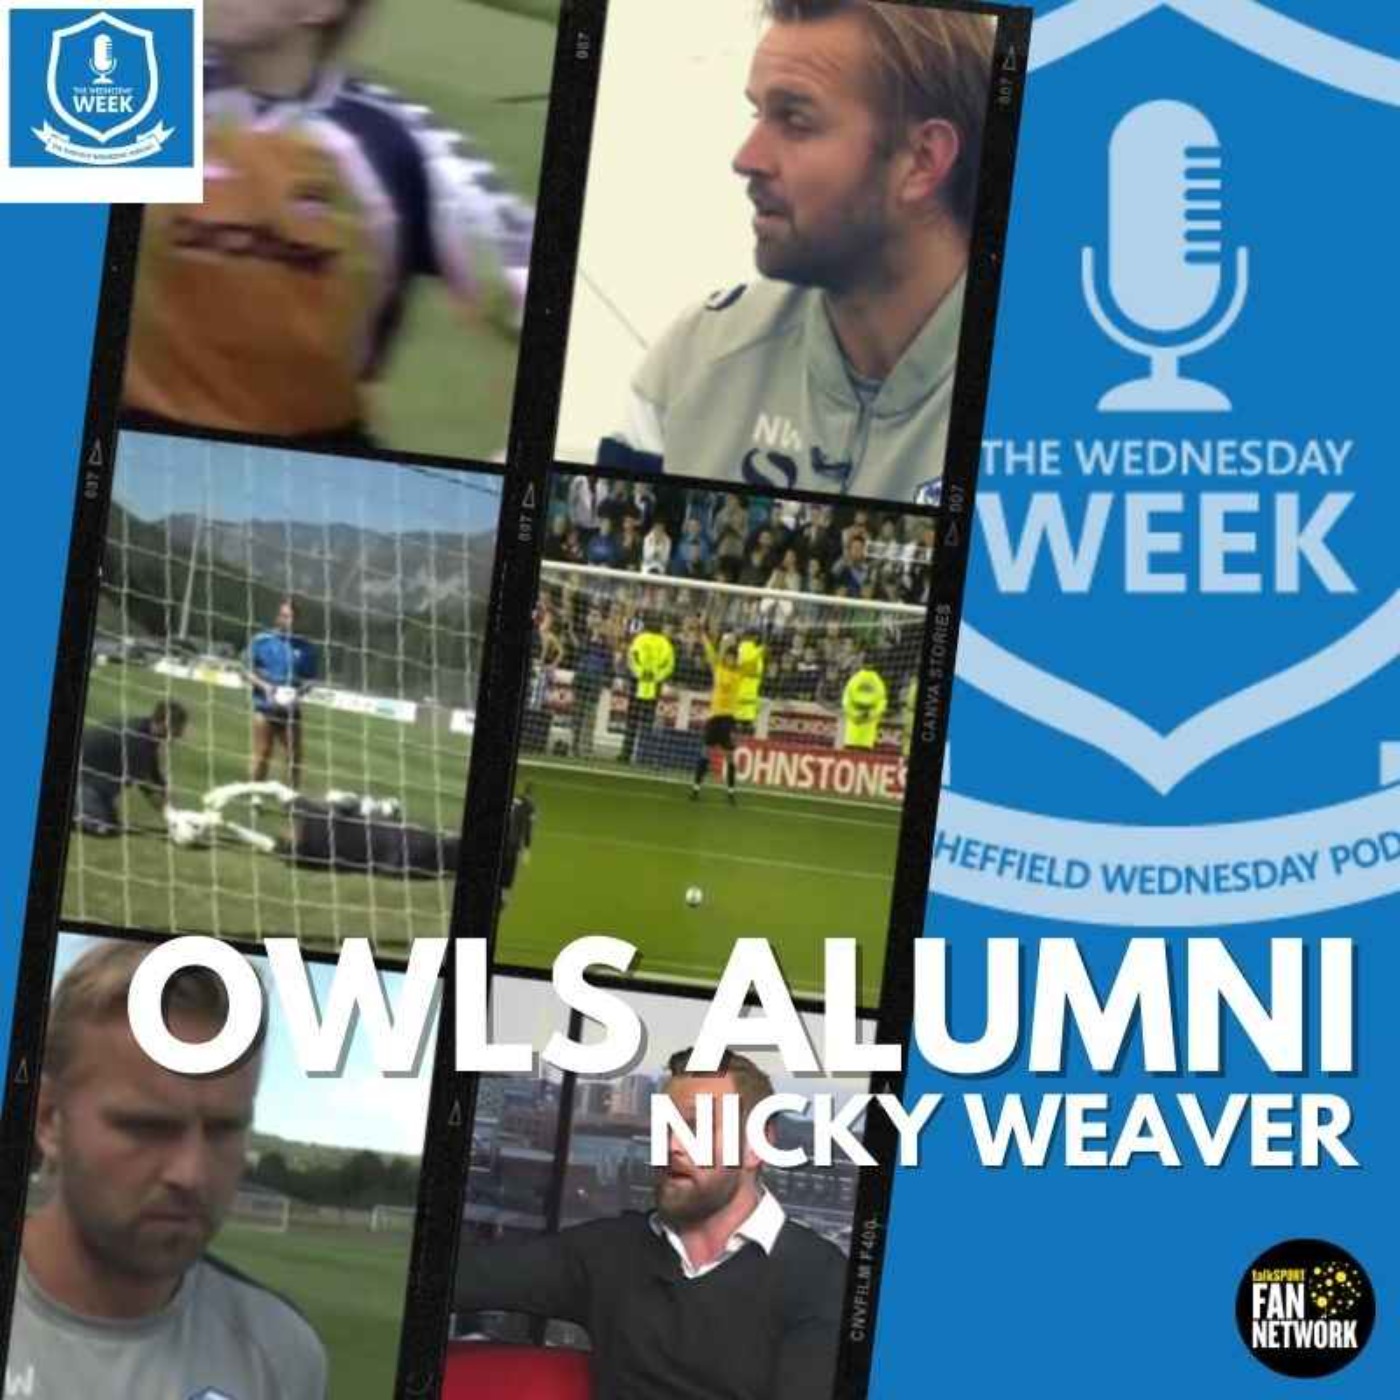 Owls Alumni - Nicky Weaver